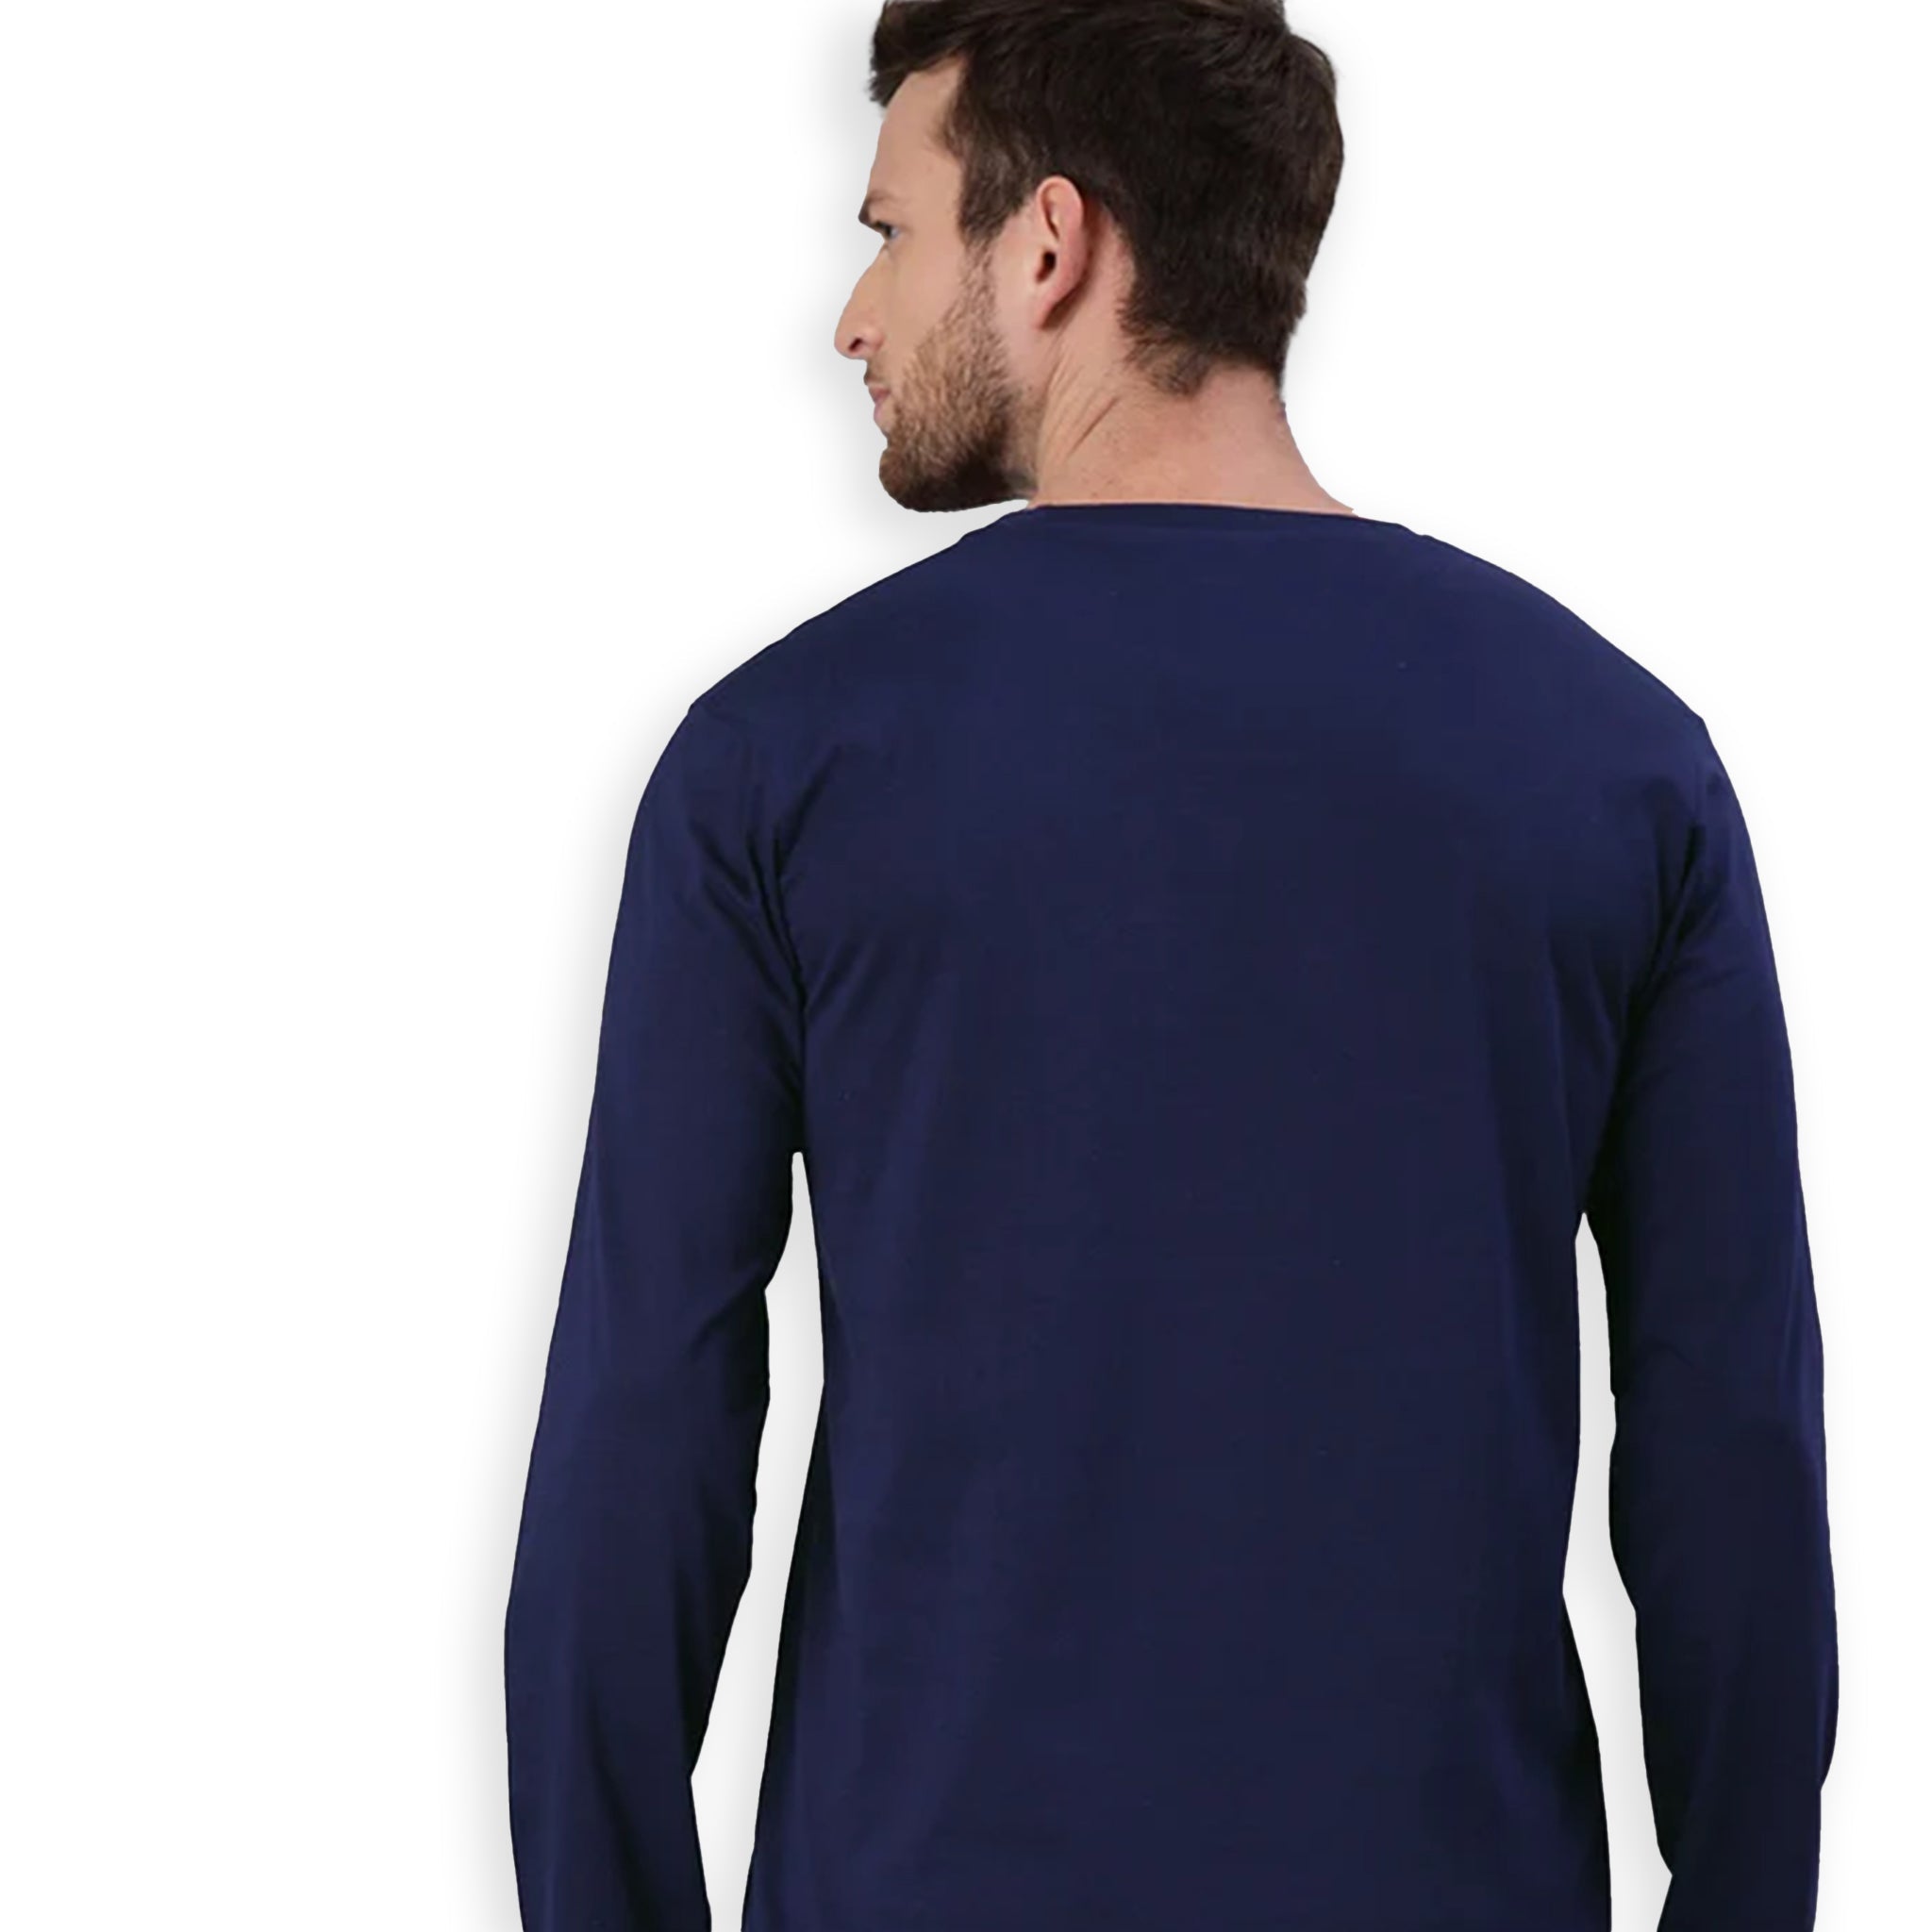 Bizzar's Navy Blue Full Sleeve T-Shirt